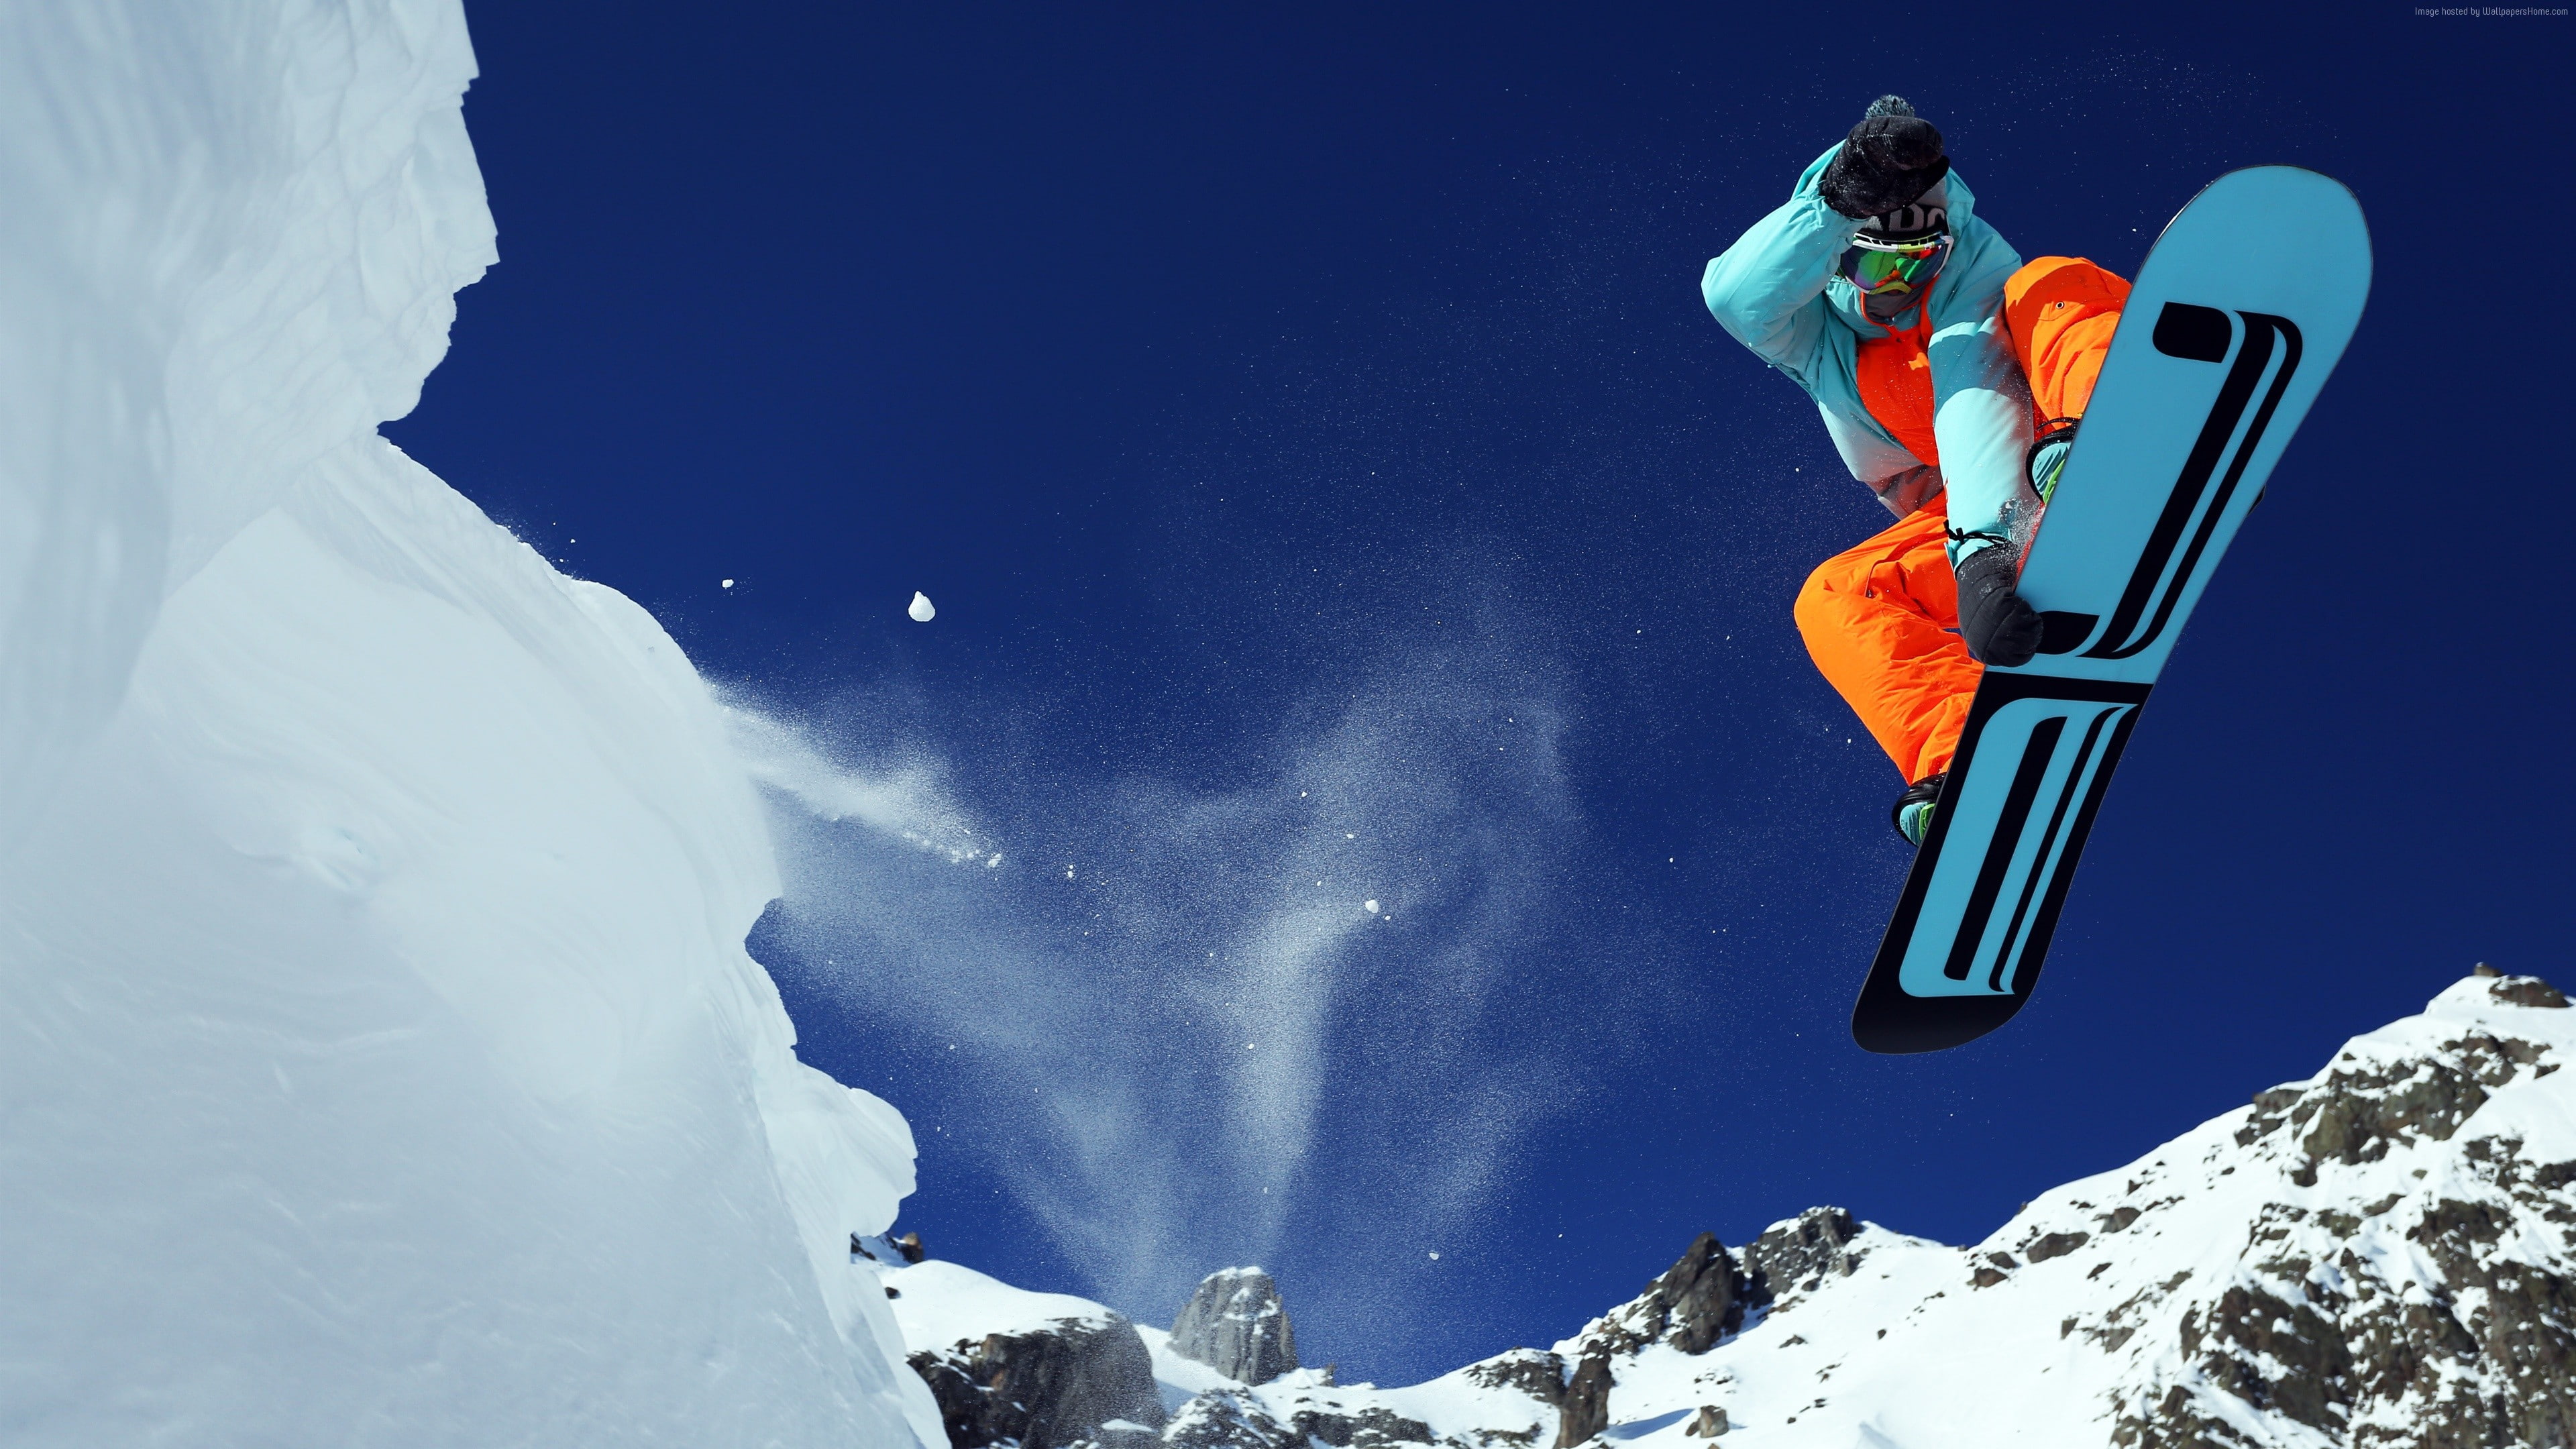 Extreme snowboarding, jump, winter